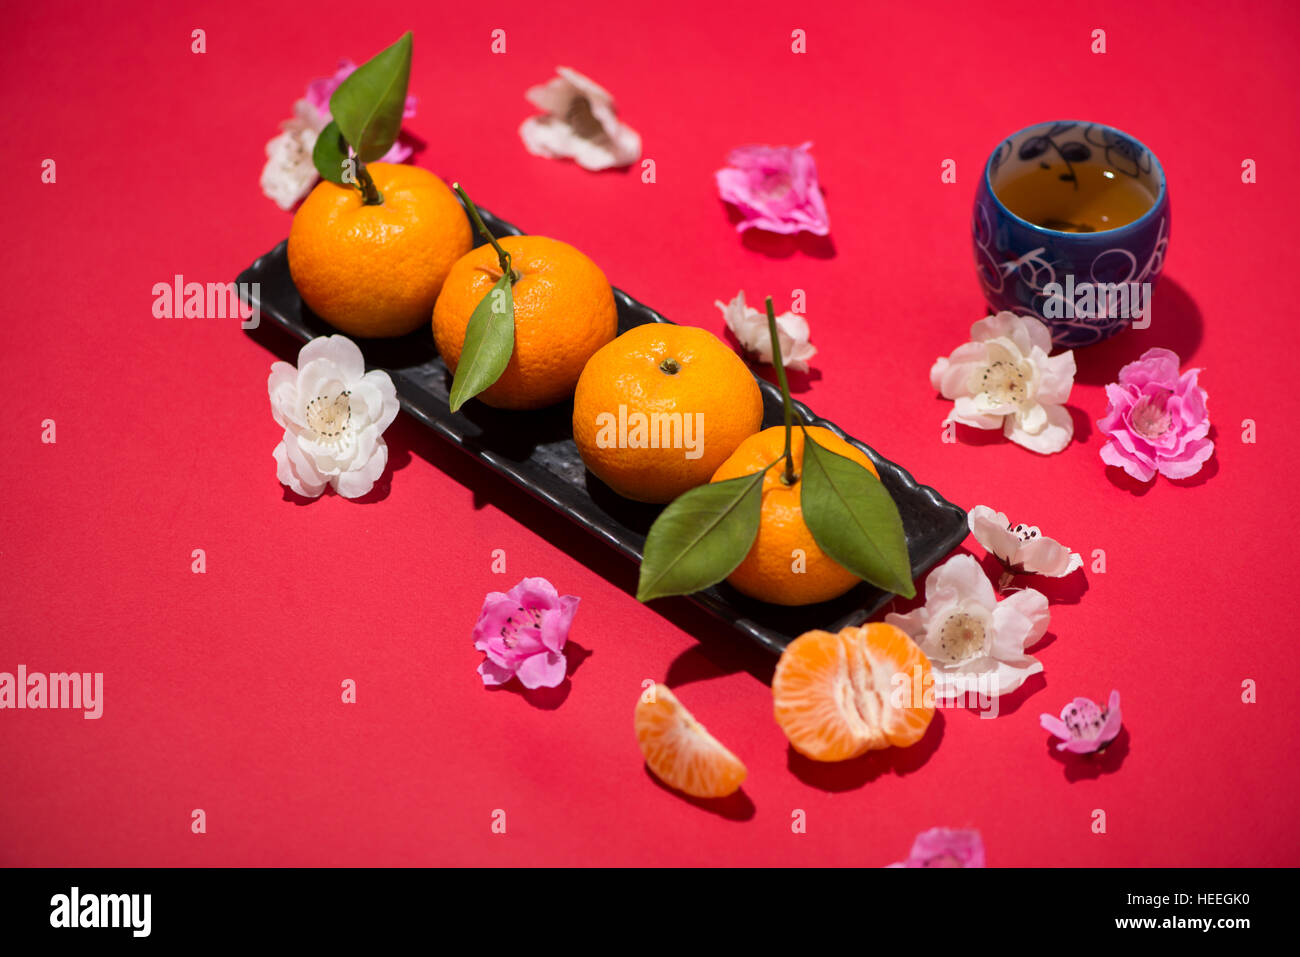 Chinese New year decorations with mandarin oranges Stock Photo